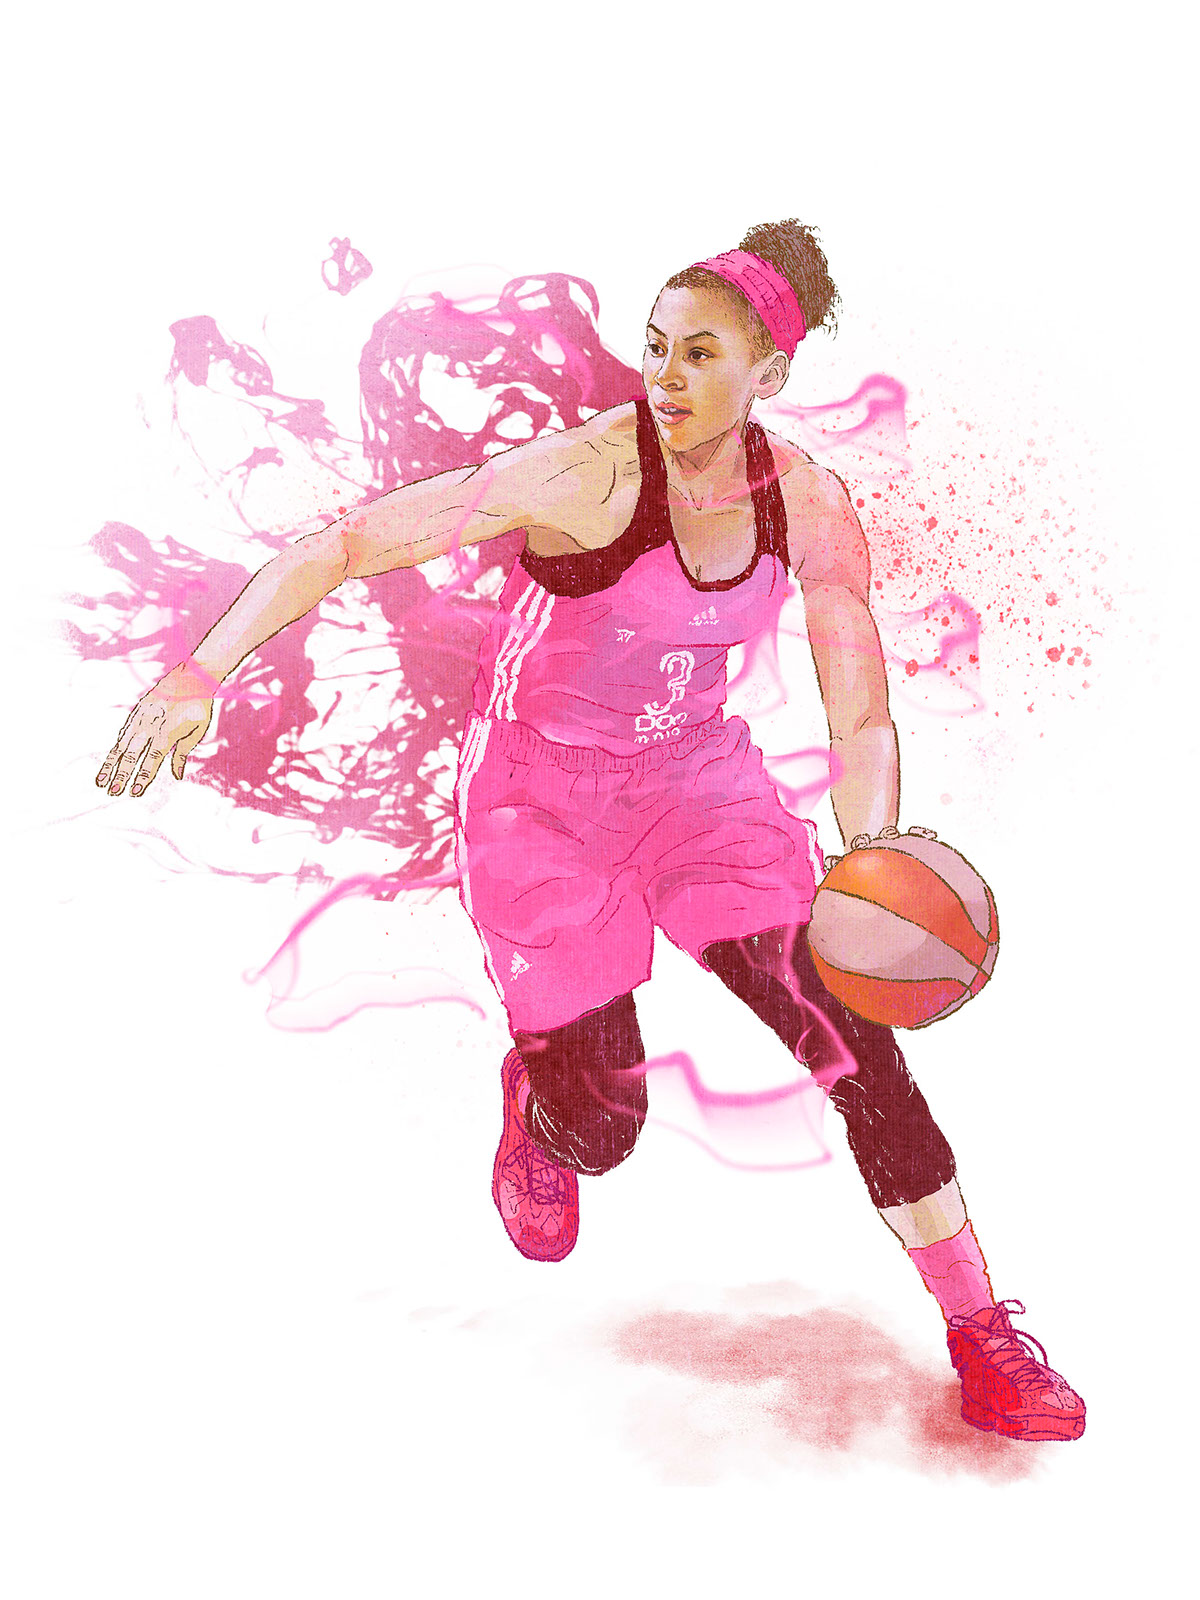 adidas adidasUS adidaswomen adidasfootwear Illustrator portrait advertisement power Magic   girls tennis basketball hockey